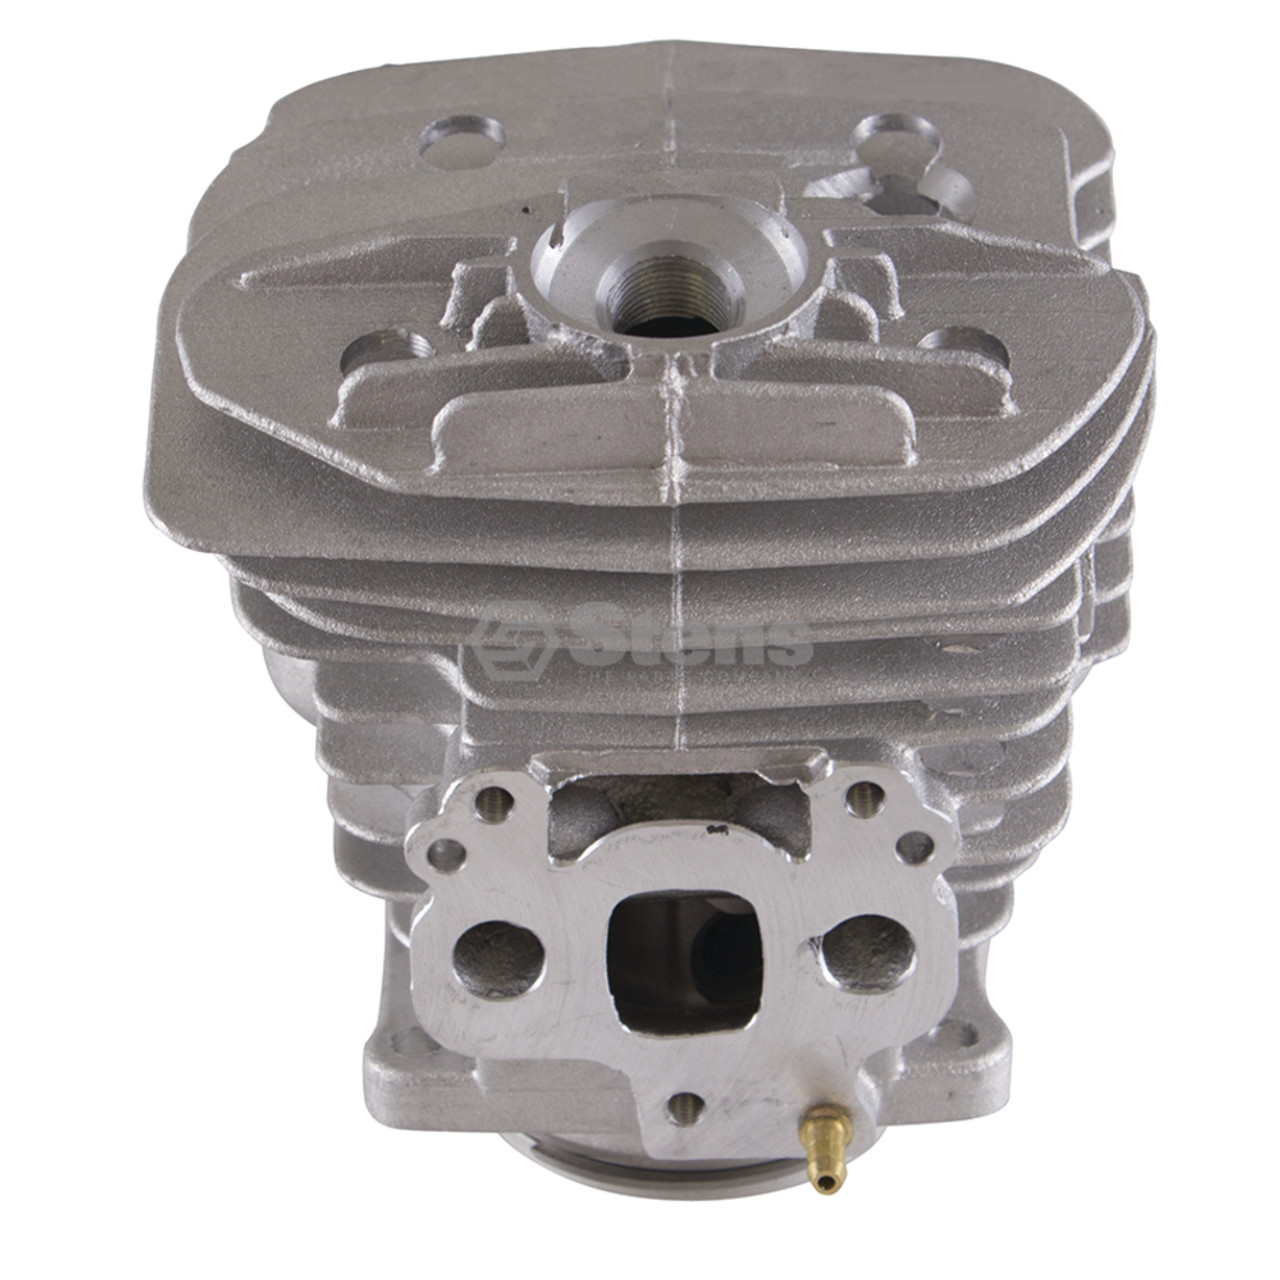 Engine Rebuild Kit for Husqvarna 570, 575XP, 537254102 Chainsaw Piston, Cylinder Rings